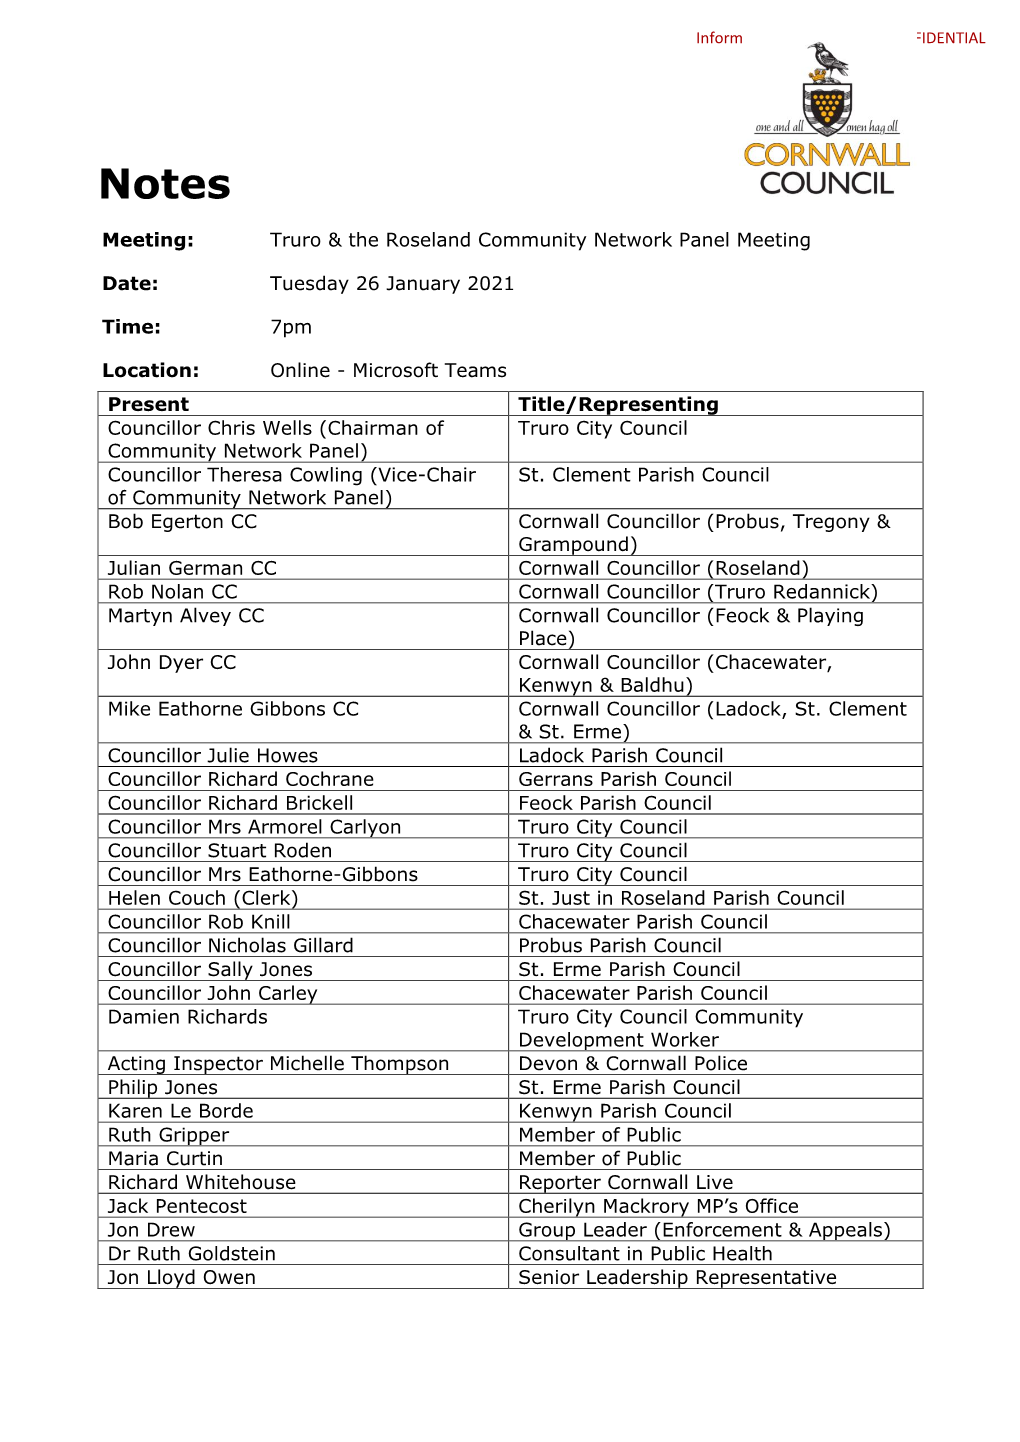 Truro Roseland Community Network Panel Meeting Notes 26 January 21